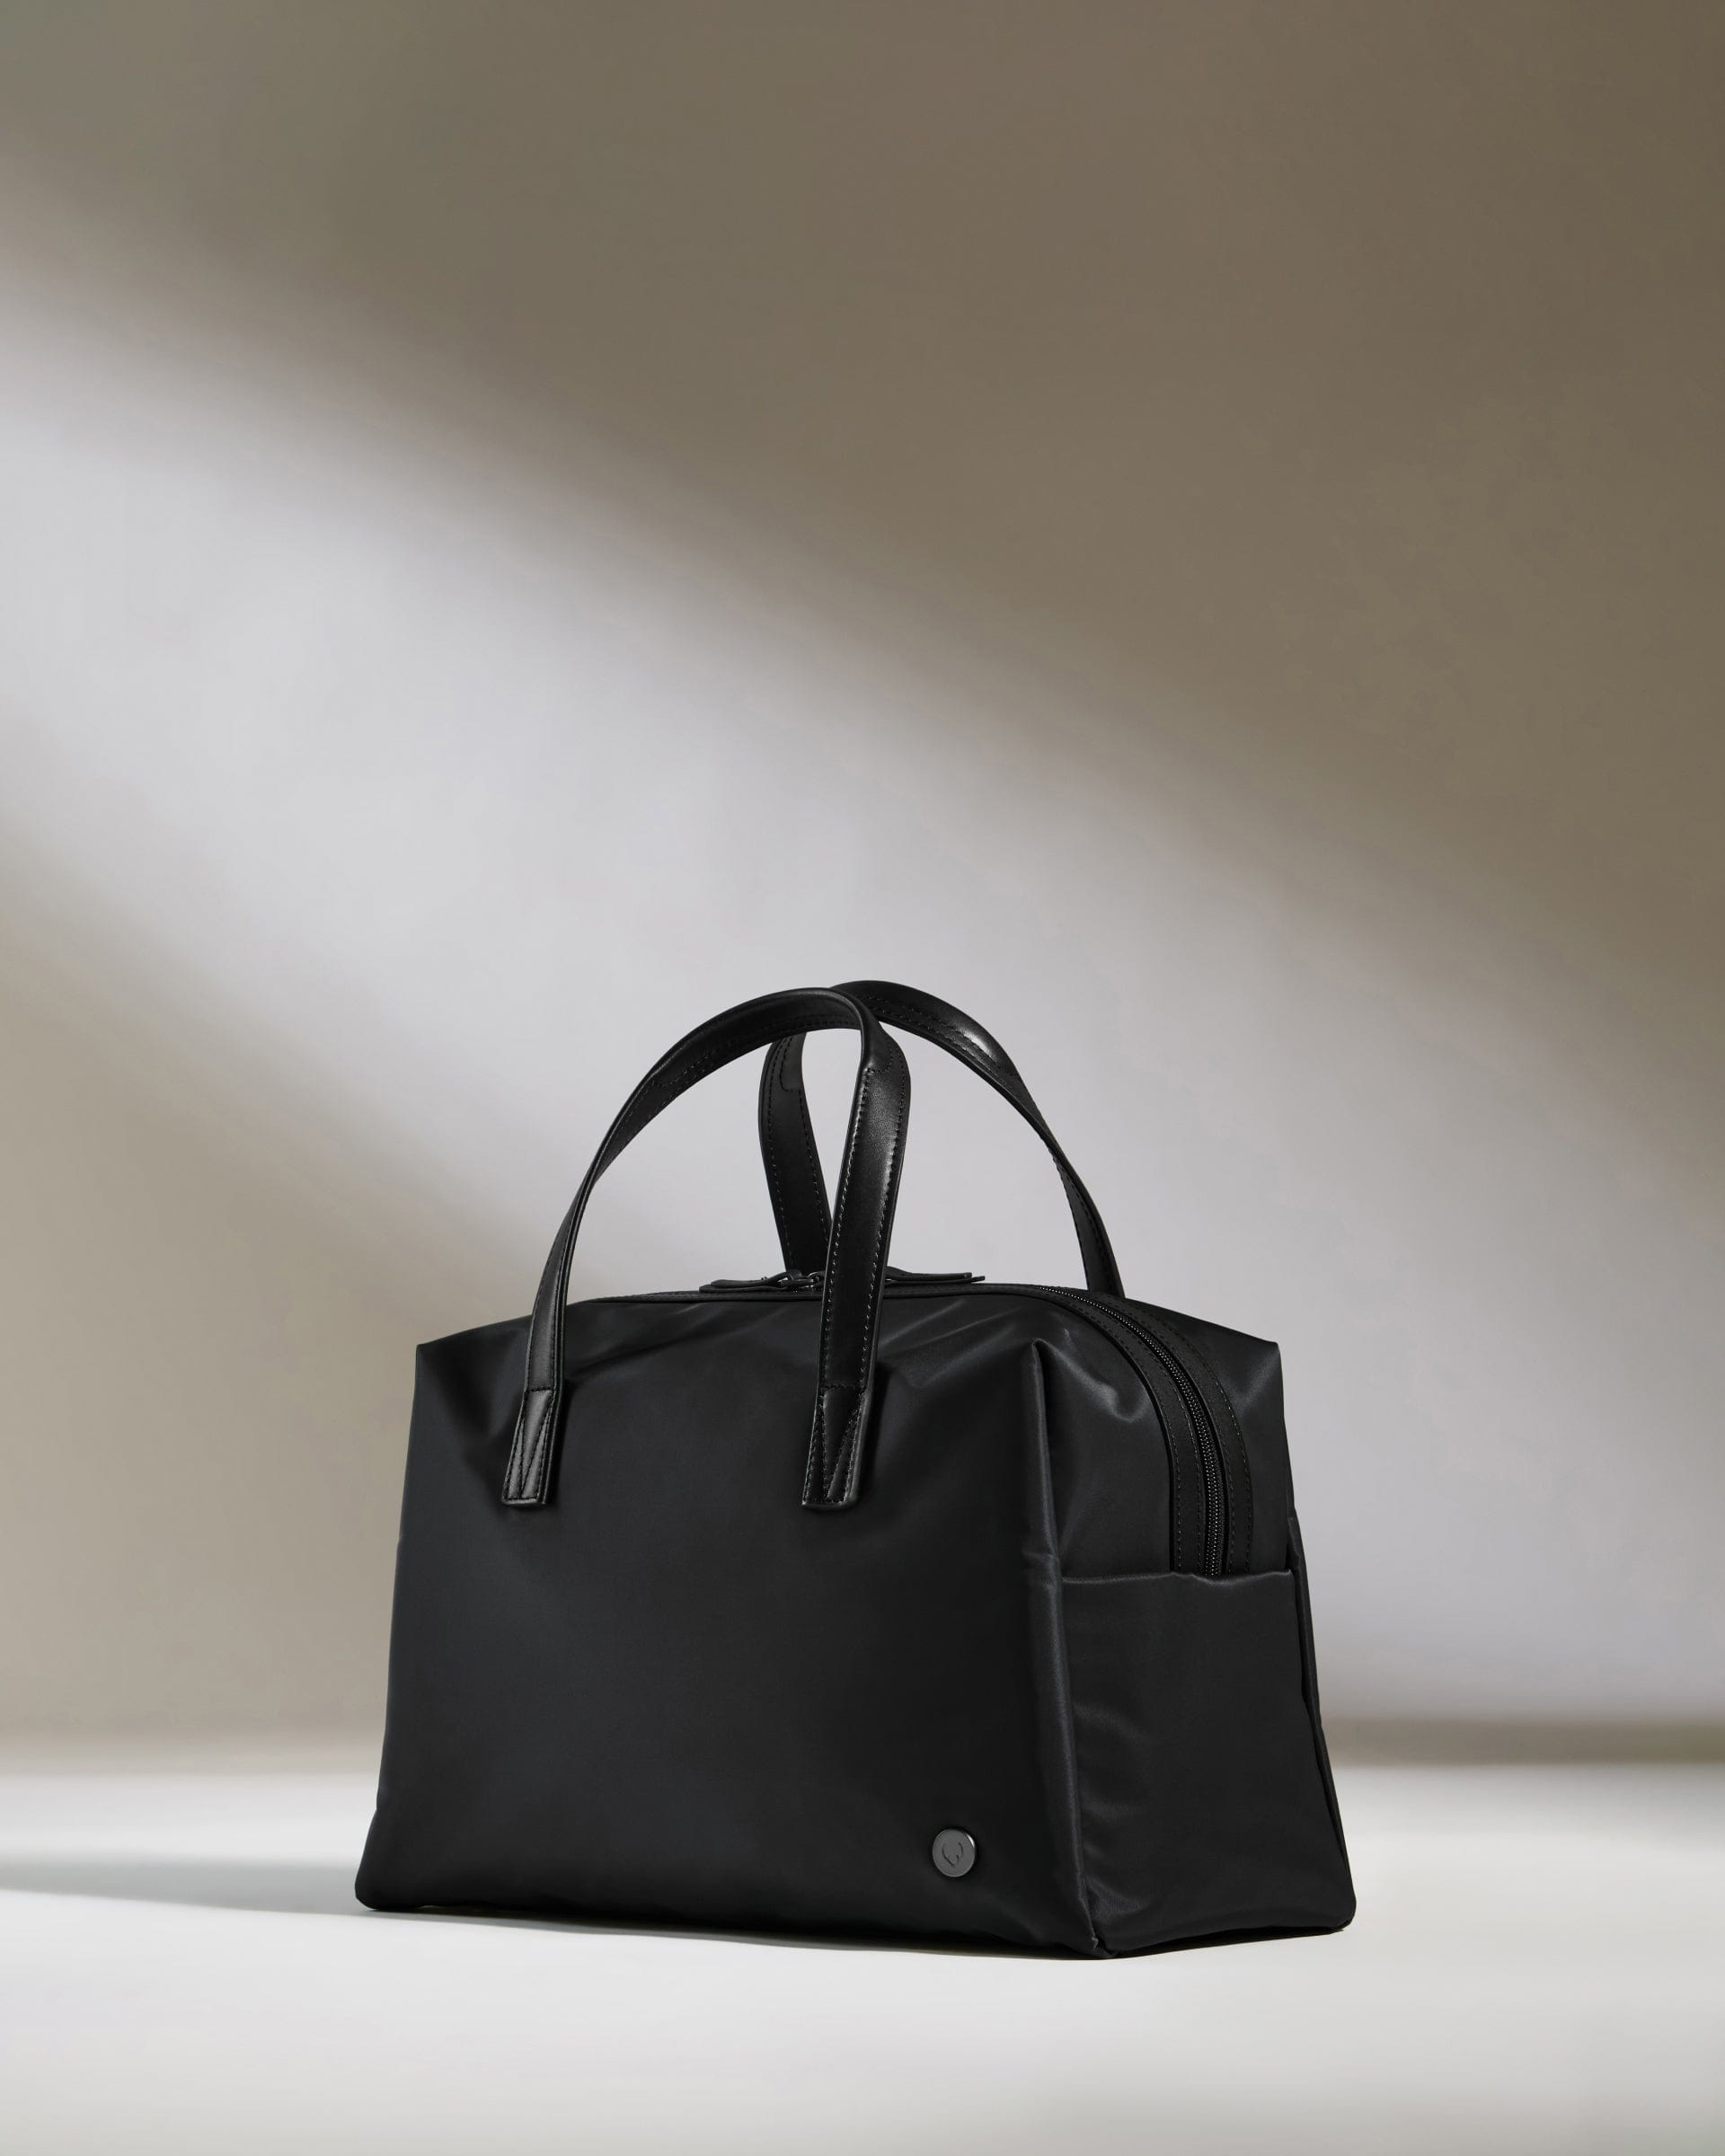 View Antler Chelsea Overnight Bag In Black Size 18cm x 26cm x 415cm information